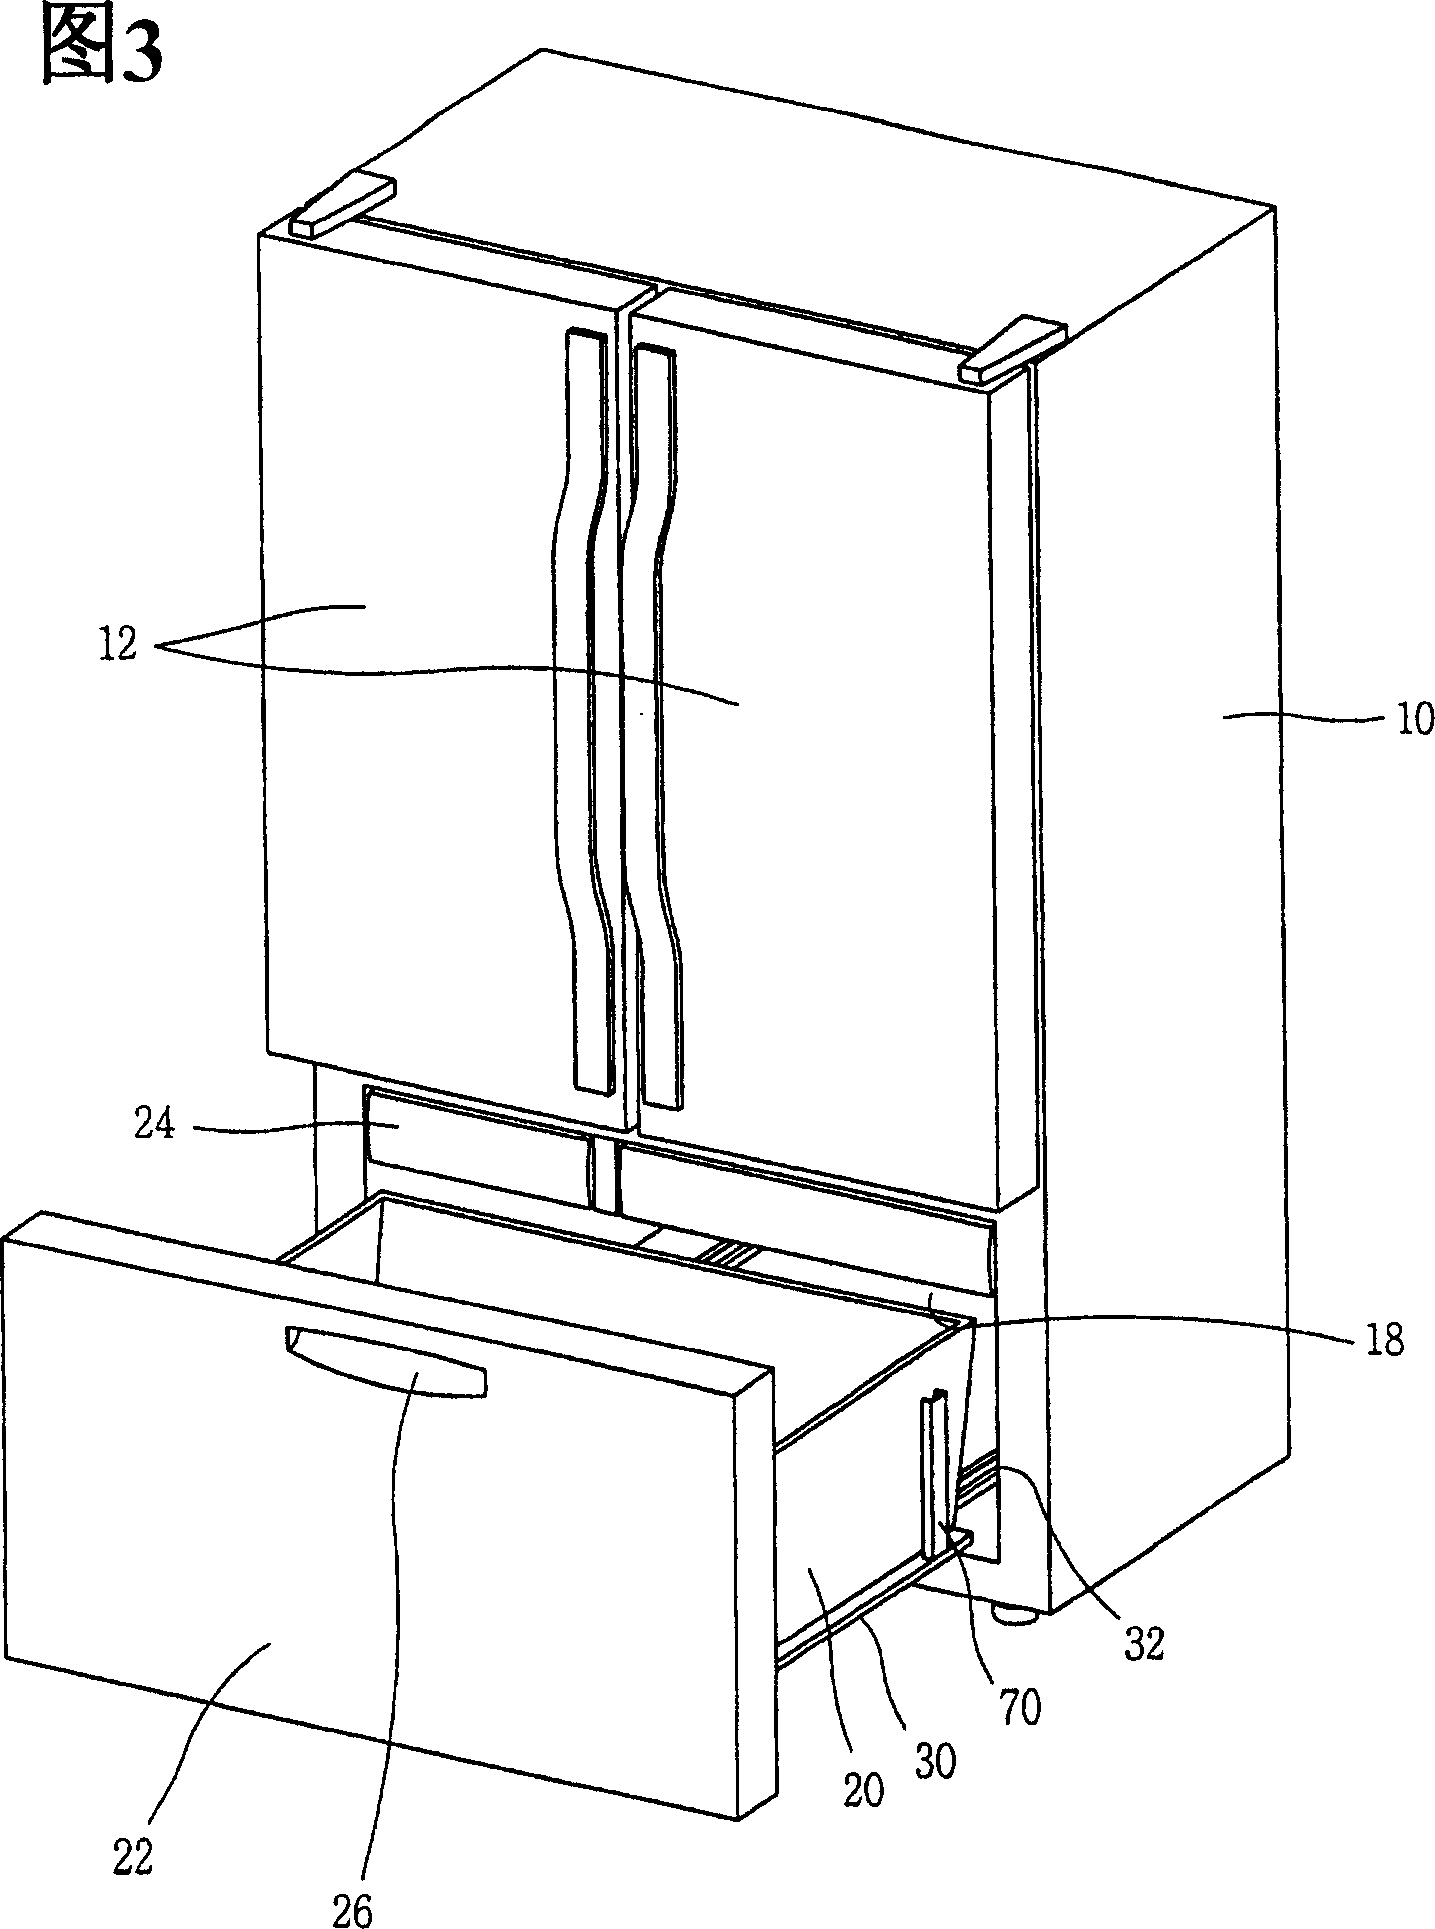 Bottom drawer type refrigerator having basket lift device